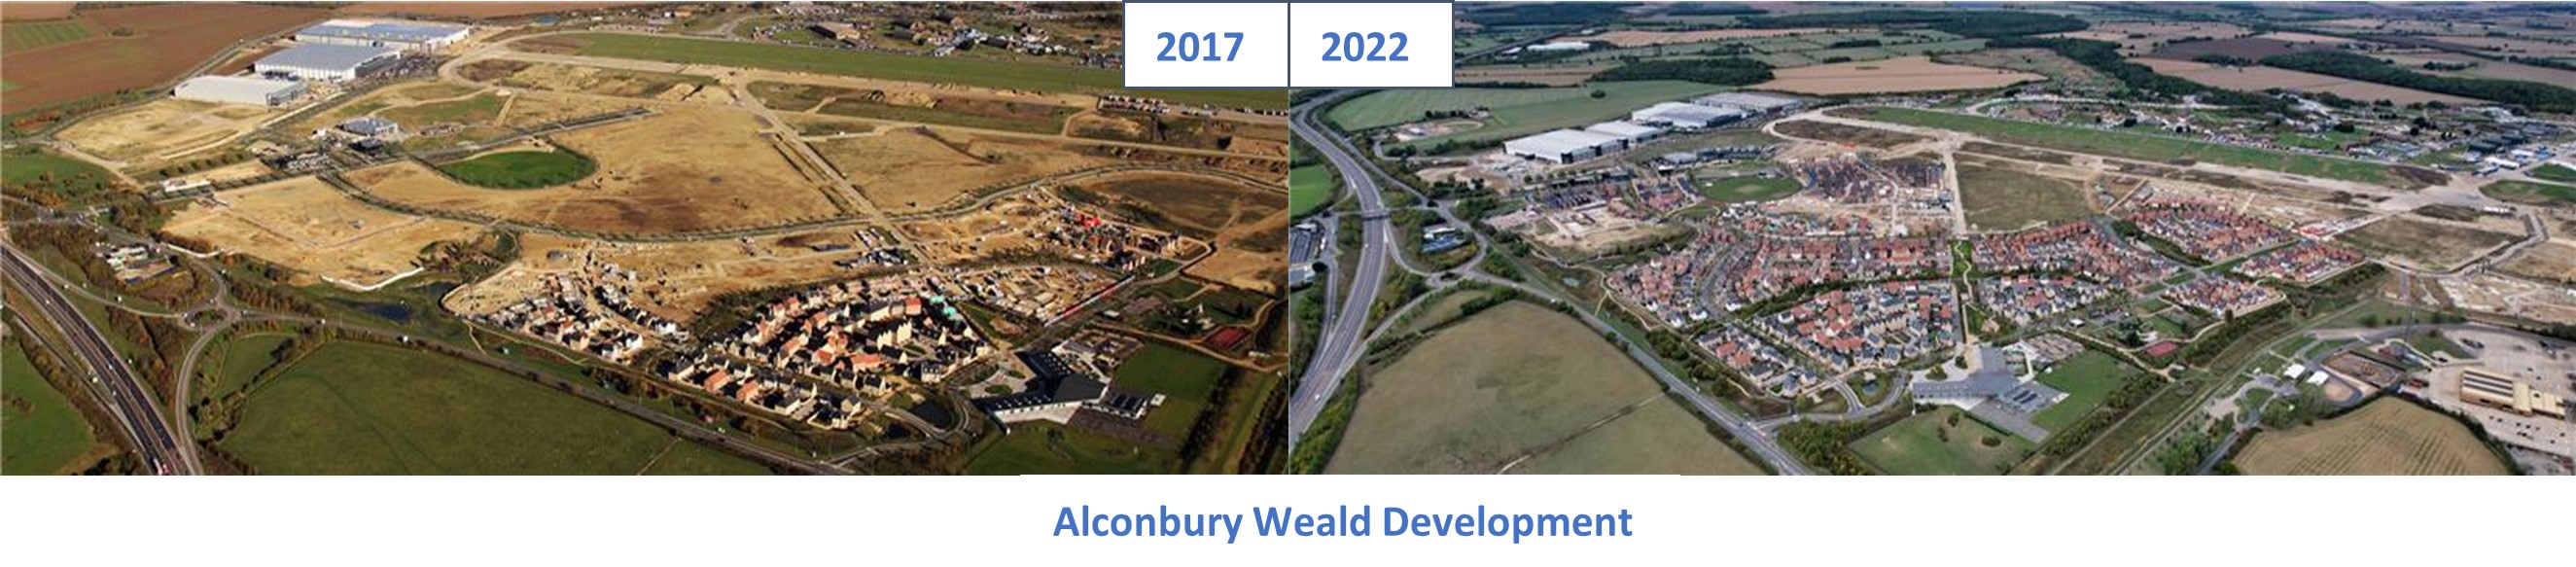 Alconbury Weald Development